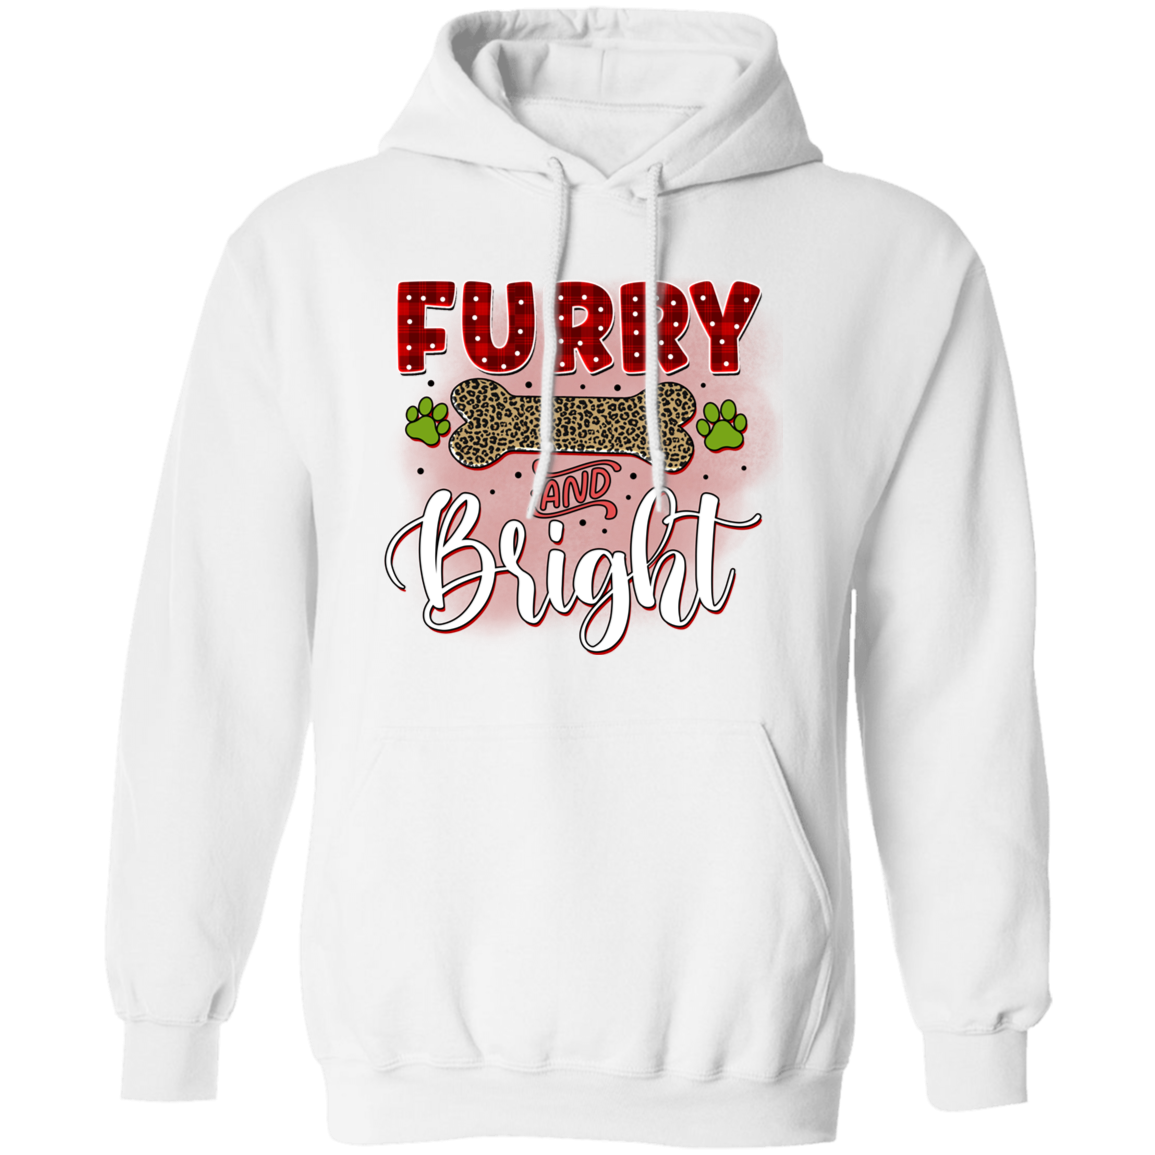 Furry & Bright Dog Christmas Pullover Hoodie Hooded Sweatshirt